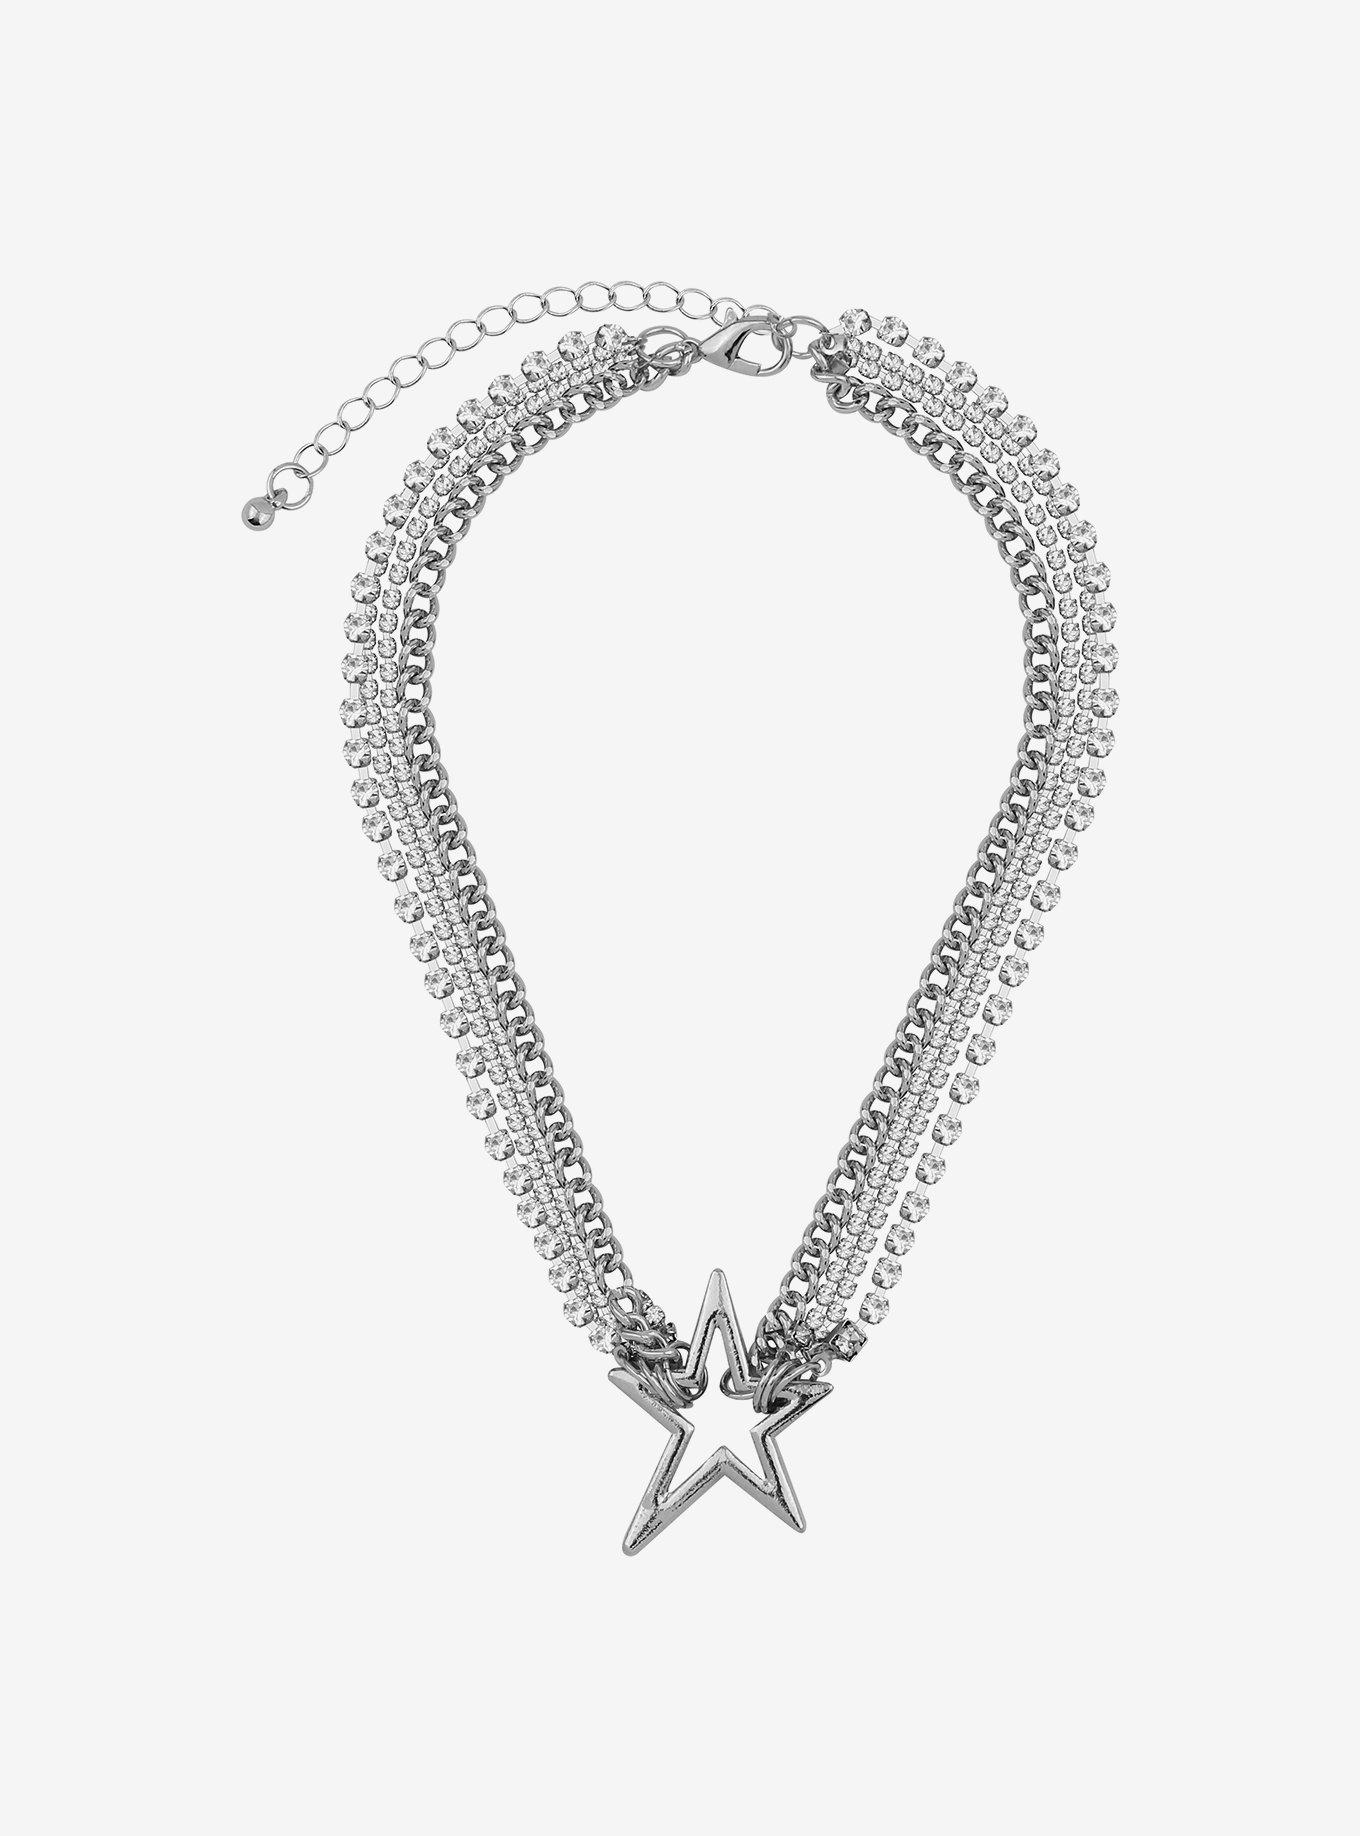 LEAQU Women Fashion Five-pointed Stars Pendant Charm Necklace Chain Choker  Jewelry Gift 